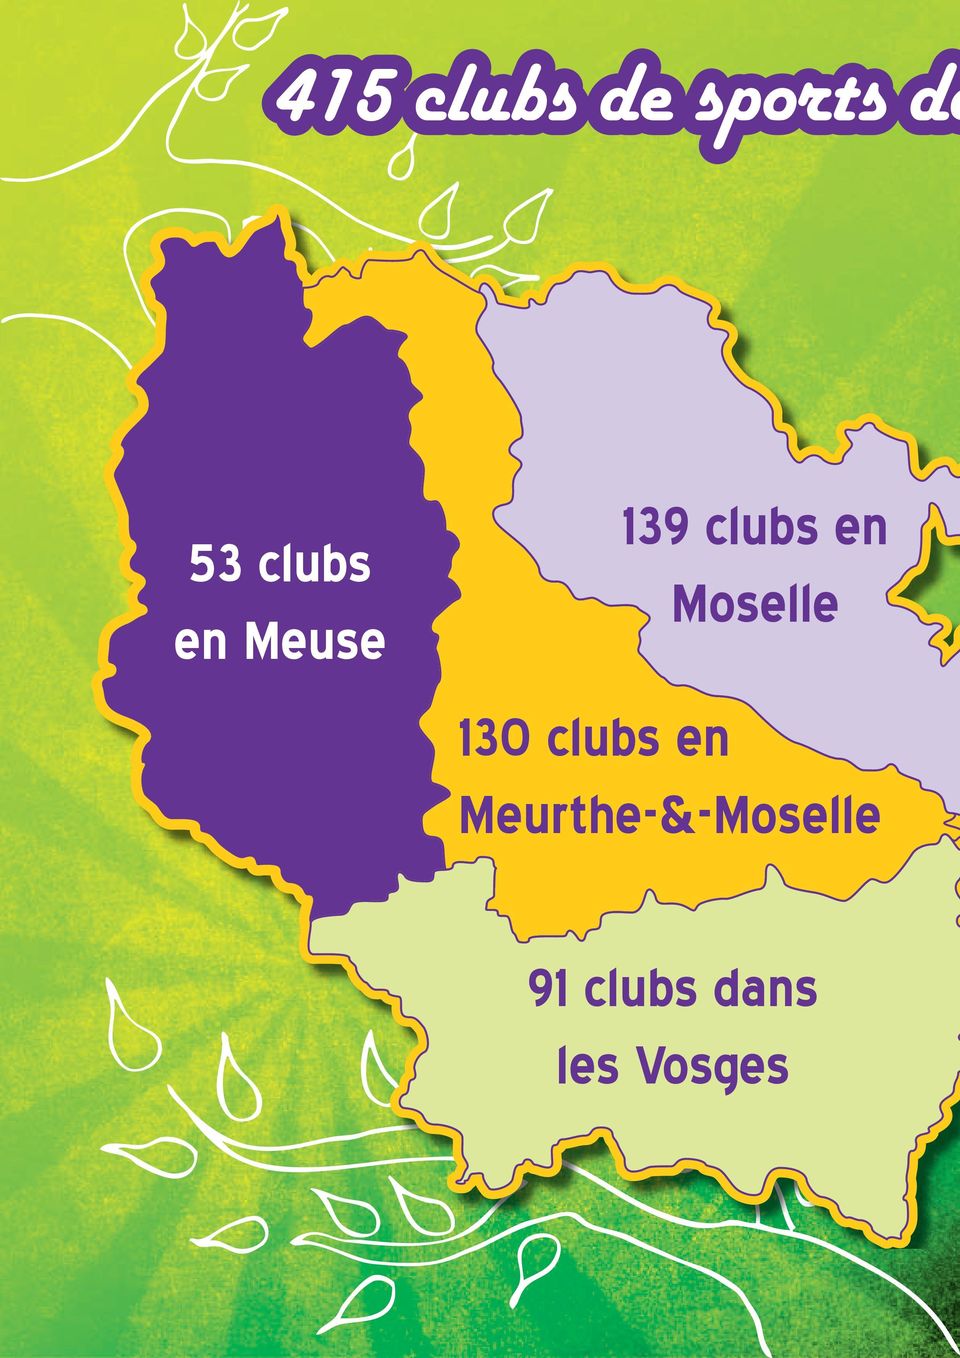 Moselle 130 clubs en